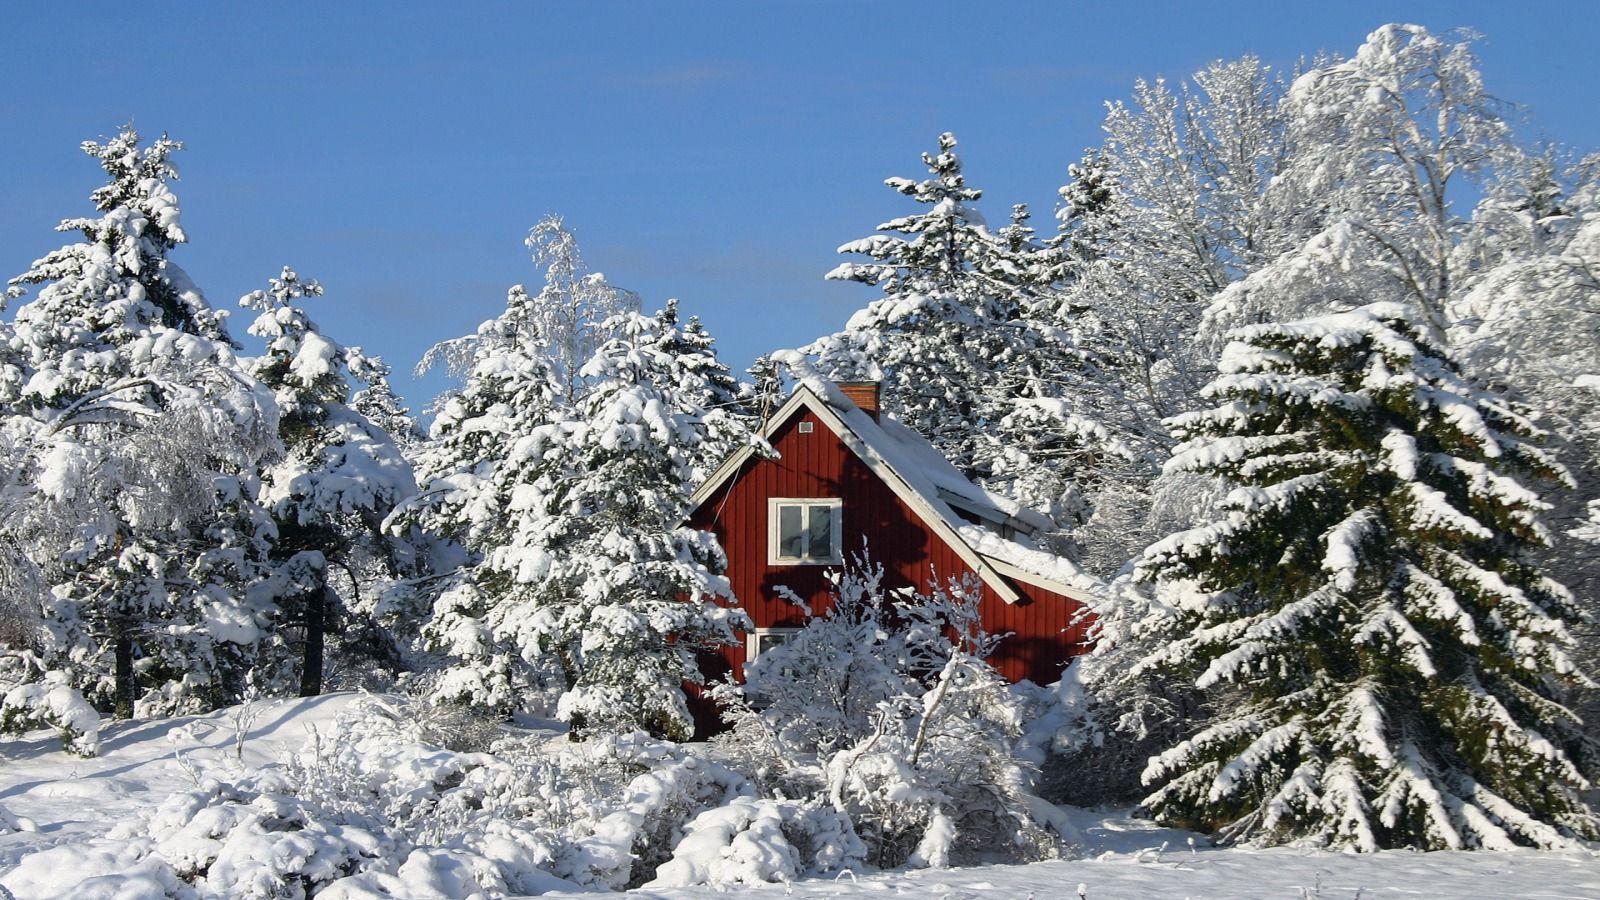 Winter in Sweden Wallpaper Winter Nature Wallpaper in jpg format